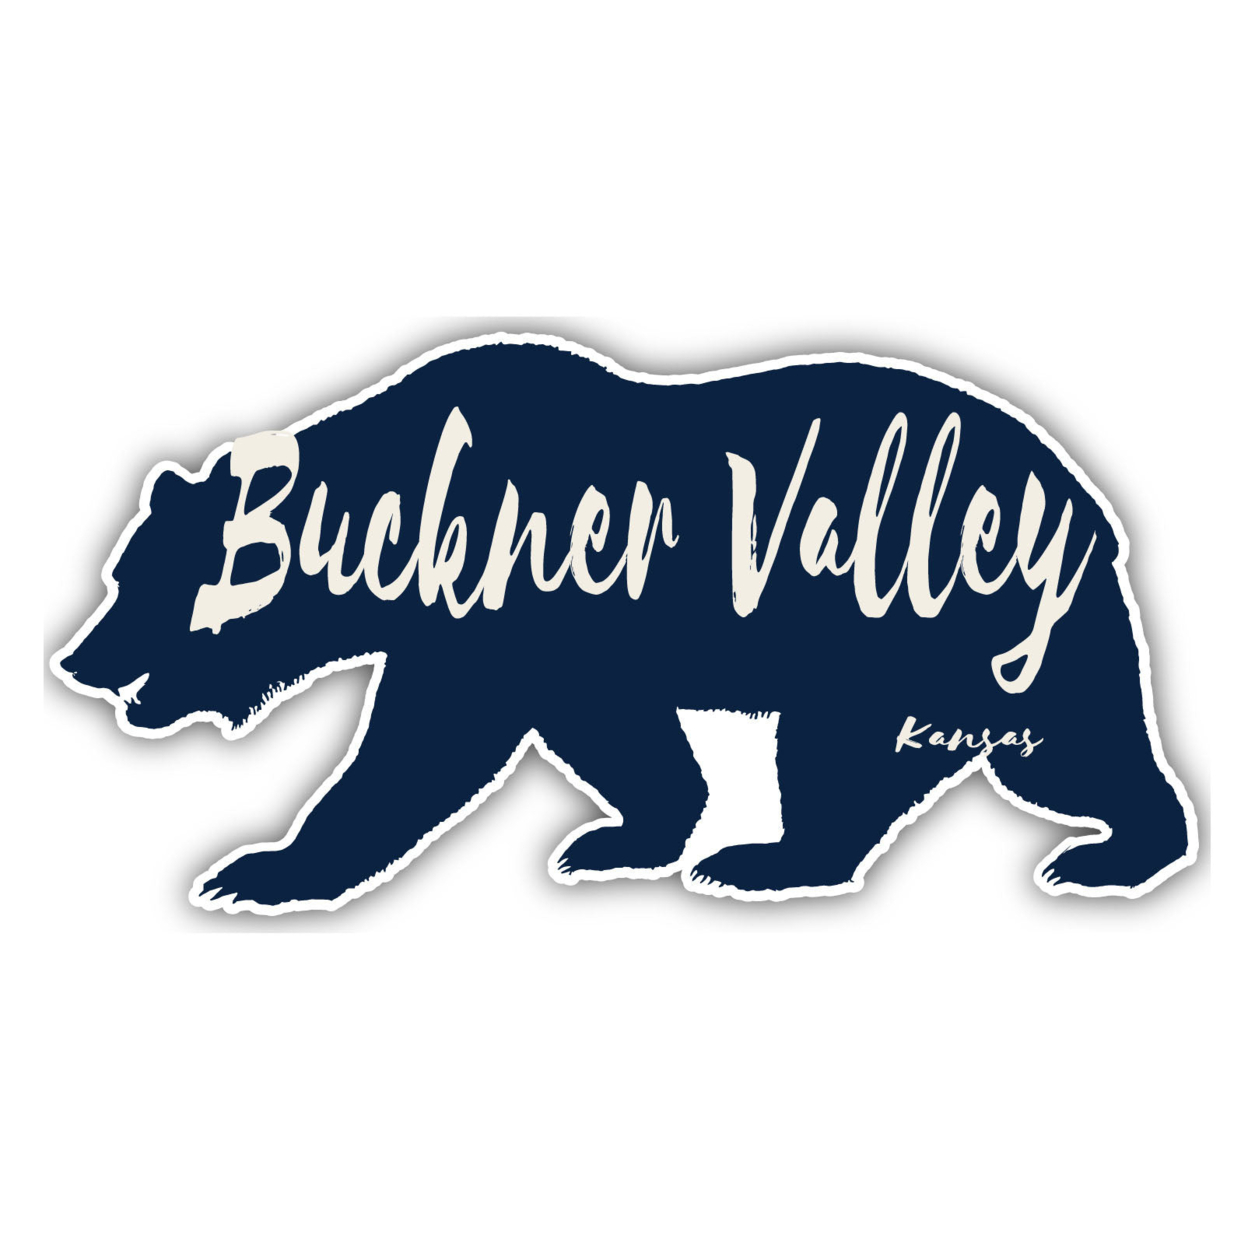 Buckner Valley Kansas Souvenir Decorative Stickers (Choose Theme And Size) - Single Unit, 6-Inch, Bear